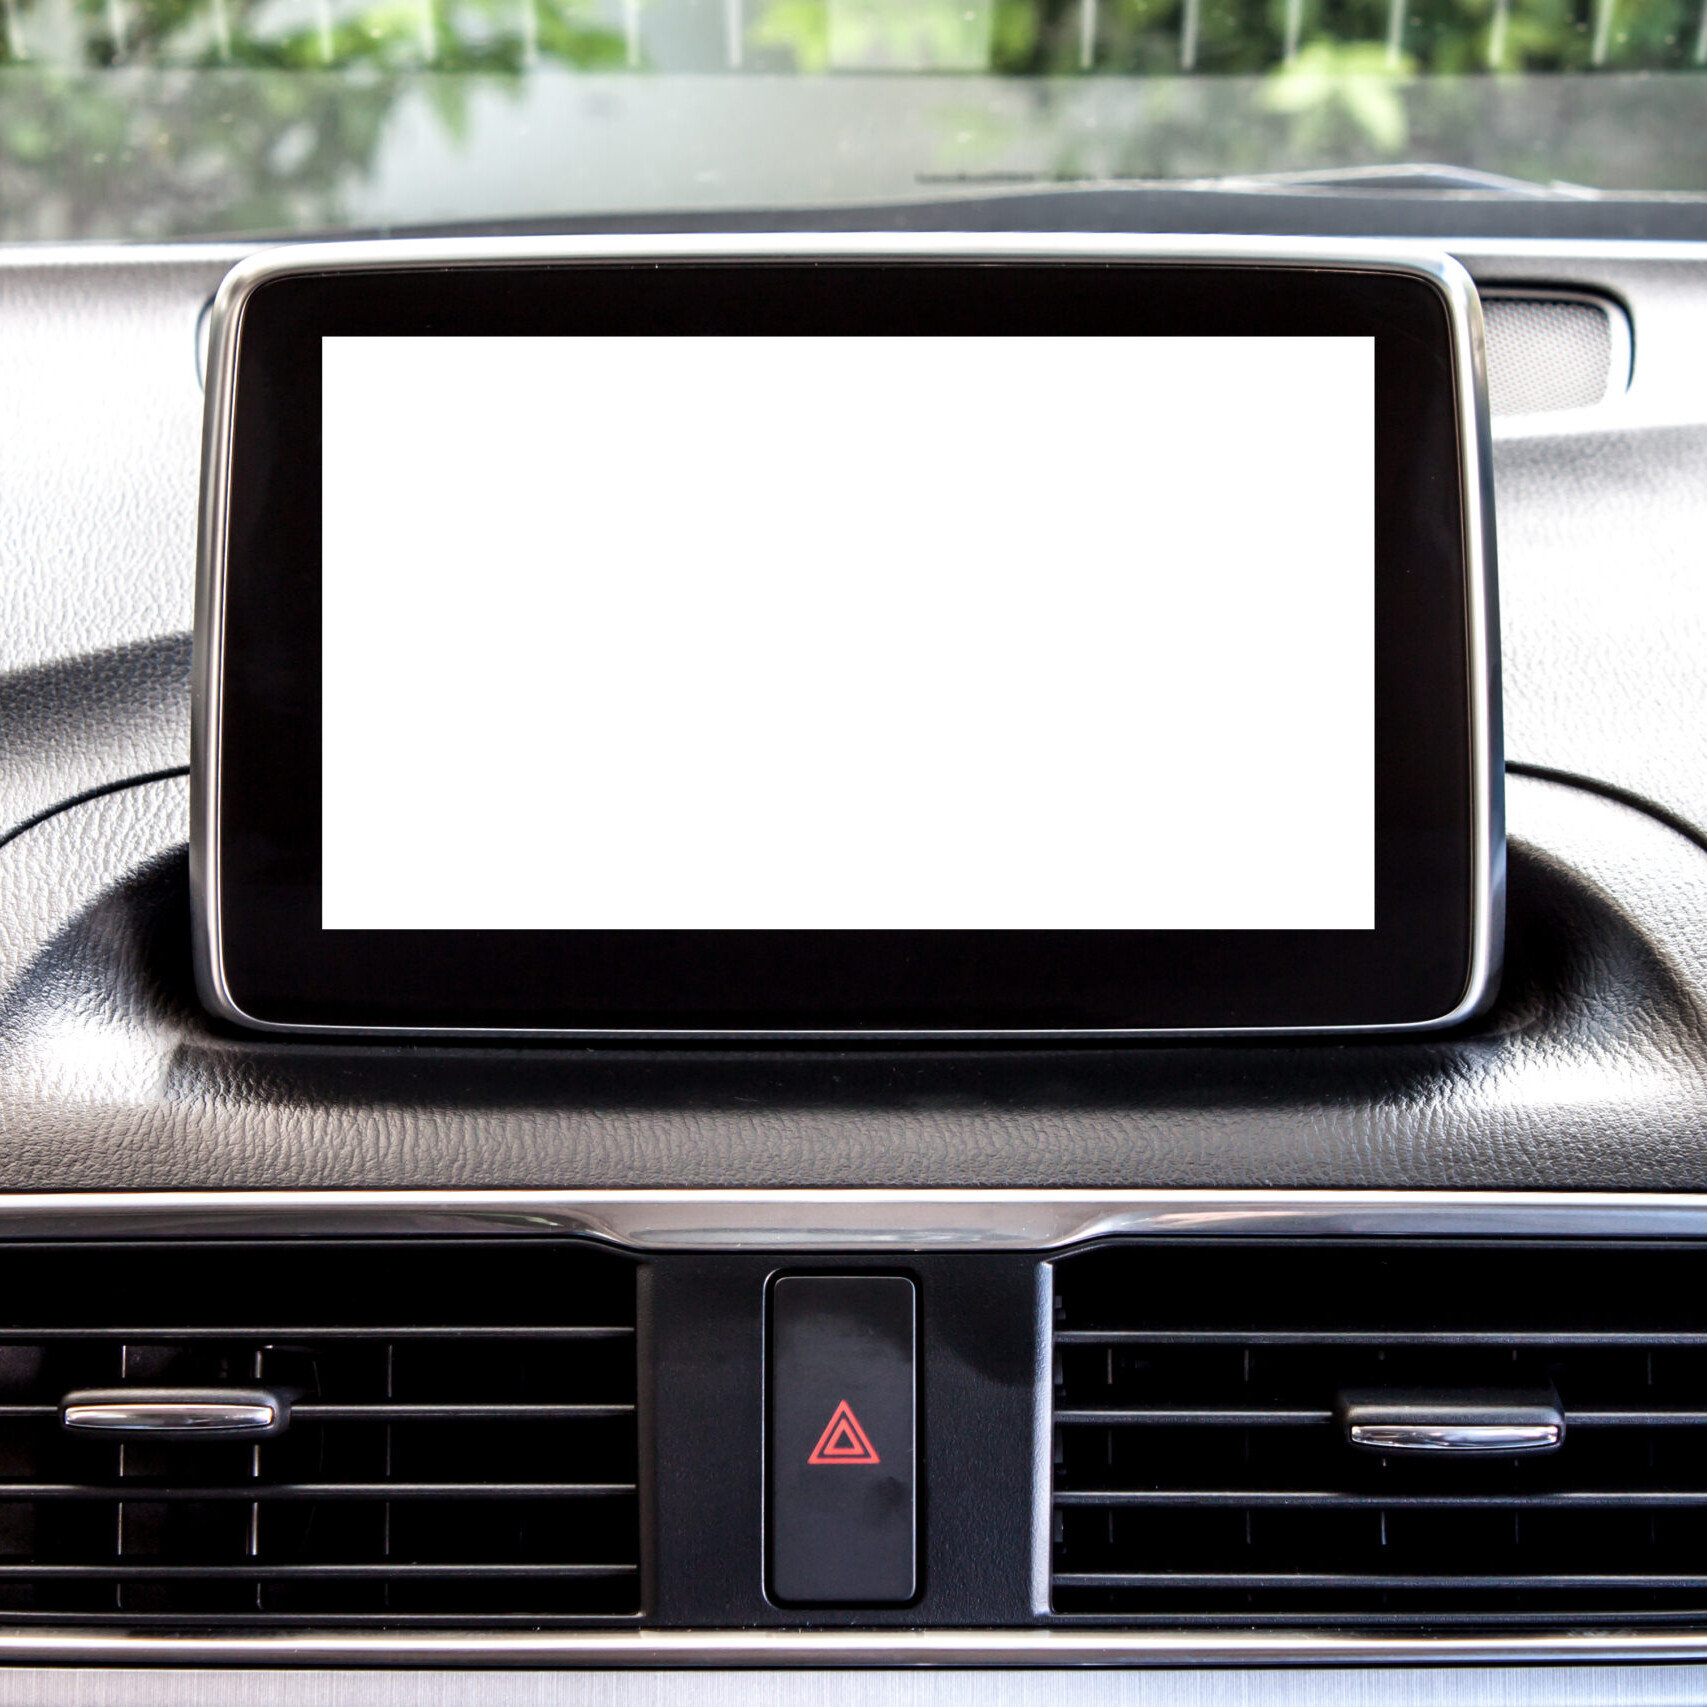 Blank screen on a car dashboard.